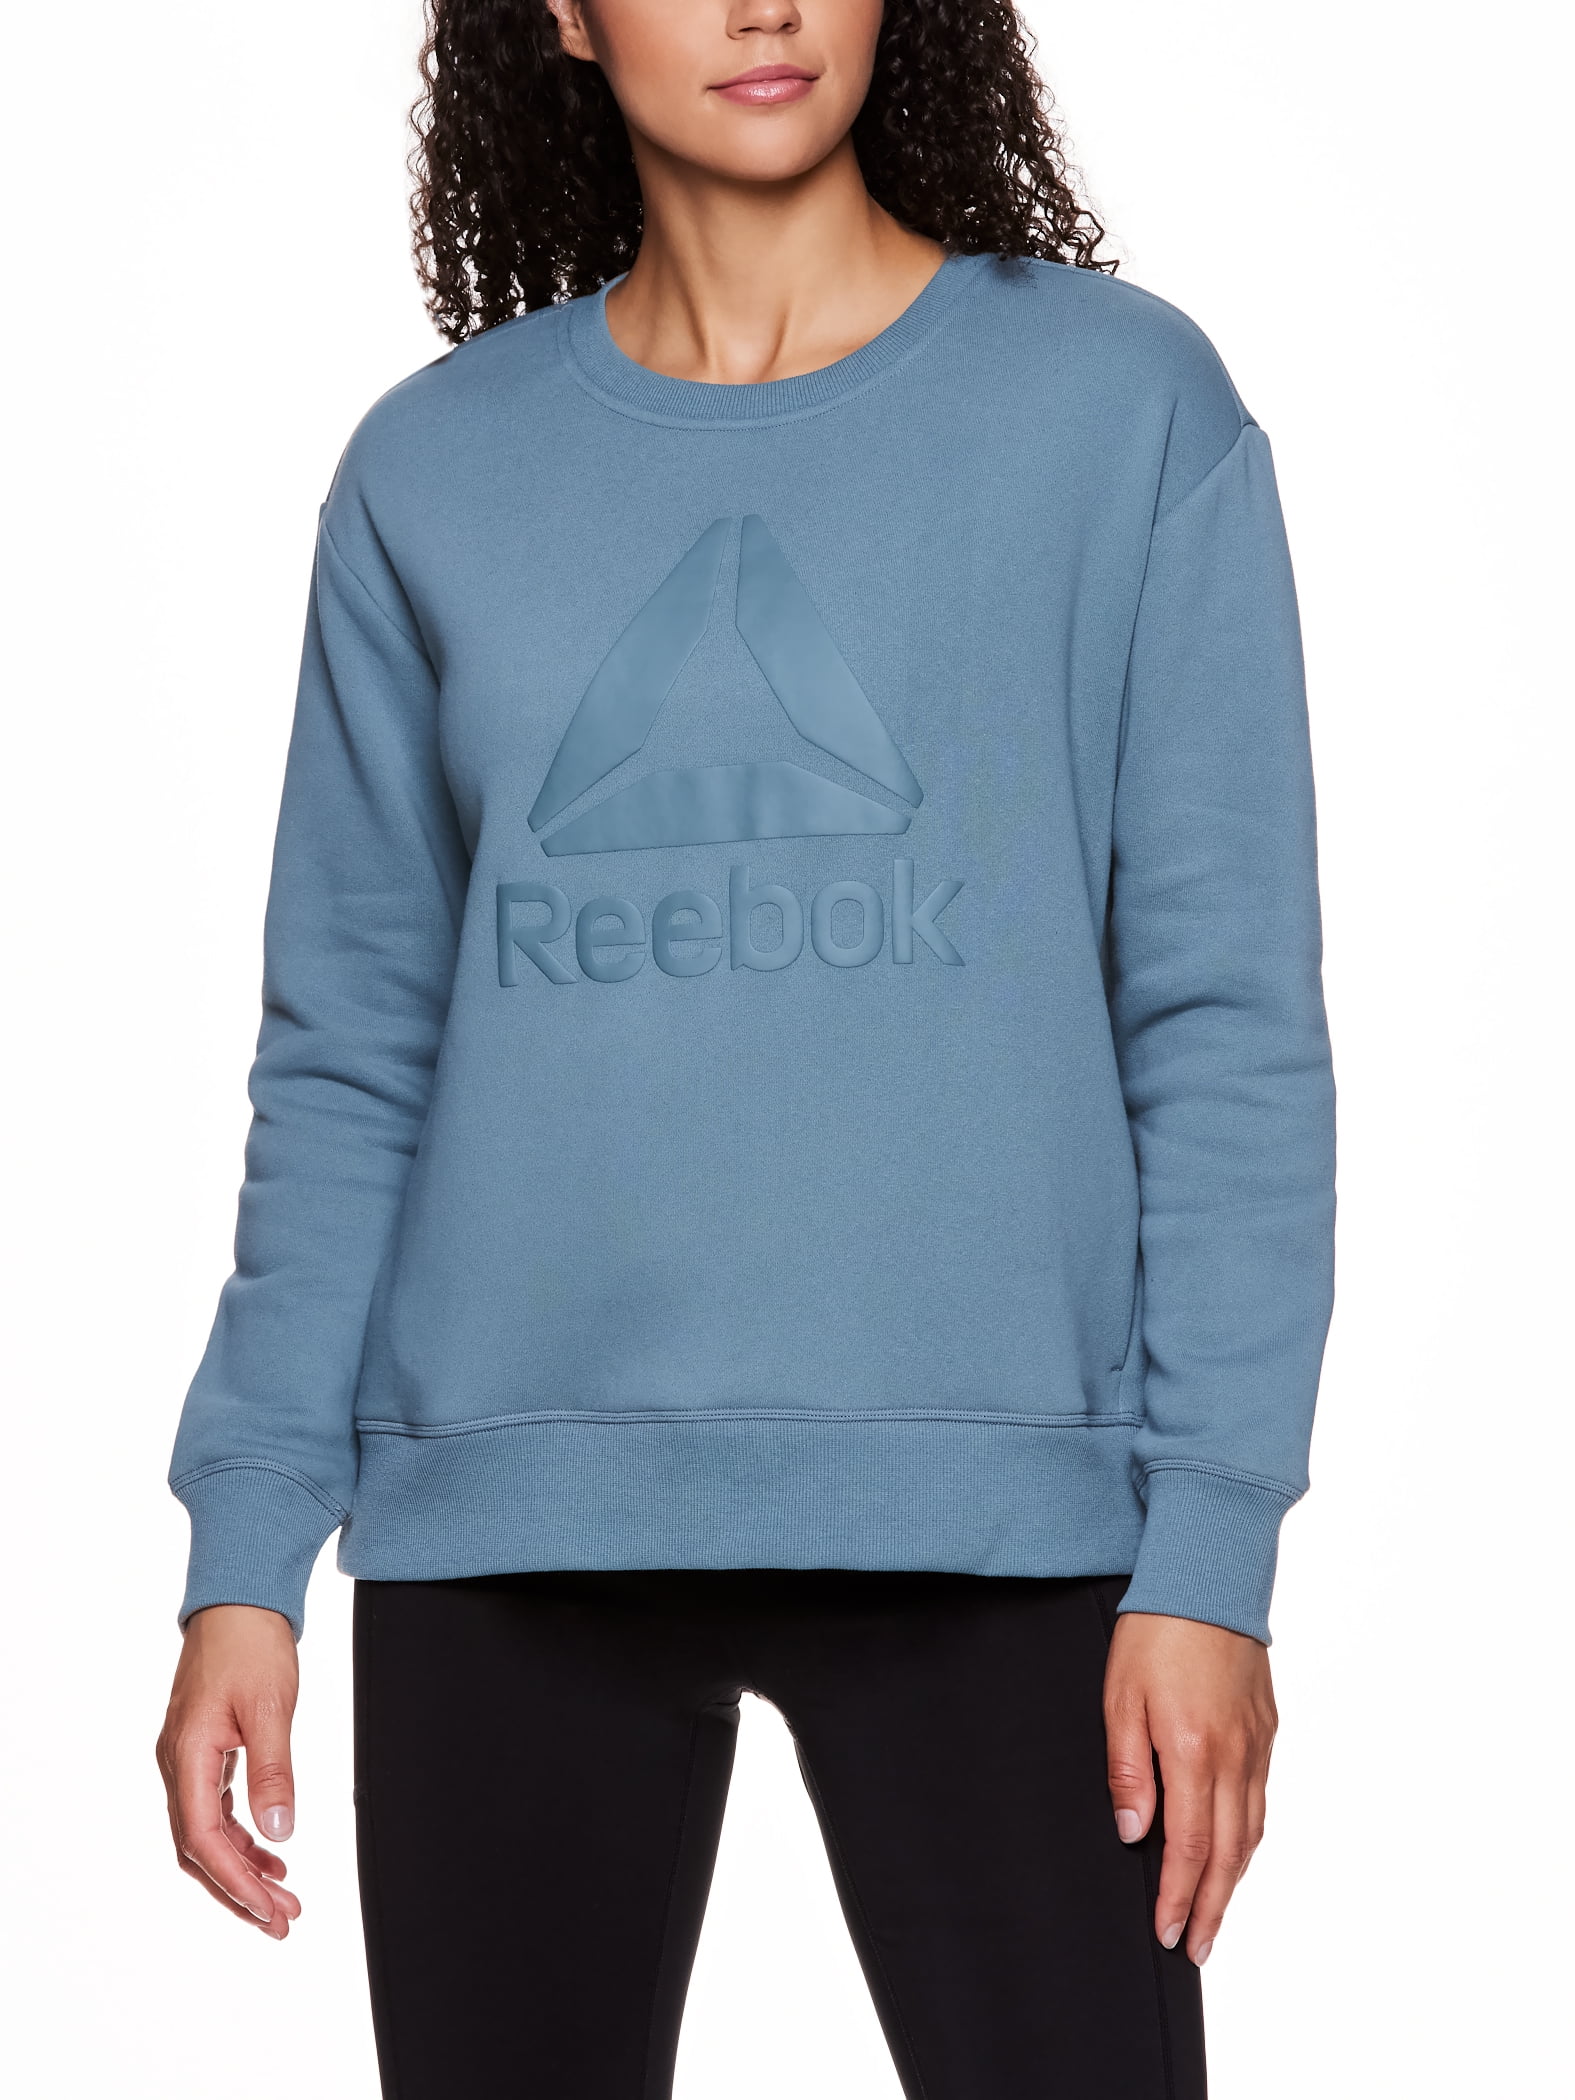 Reebok Women's Supersoft Gravity Crewneck Sweatshirt with Side Pockets -  Walmart.com